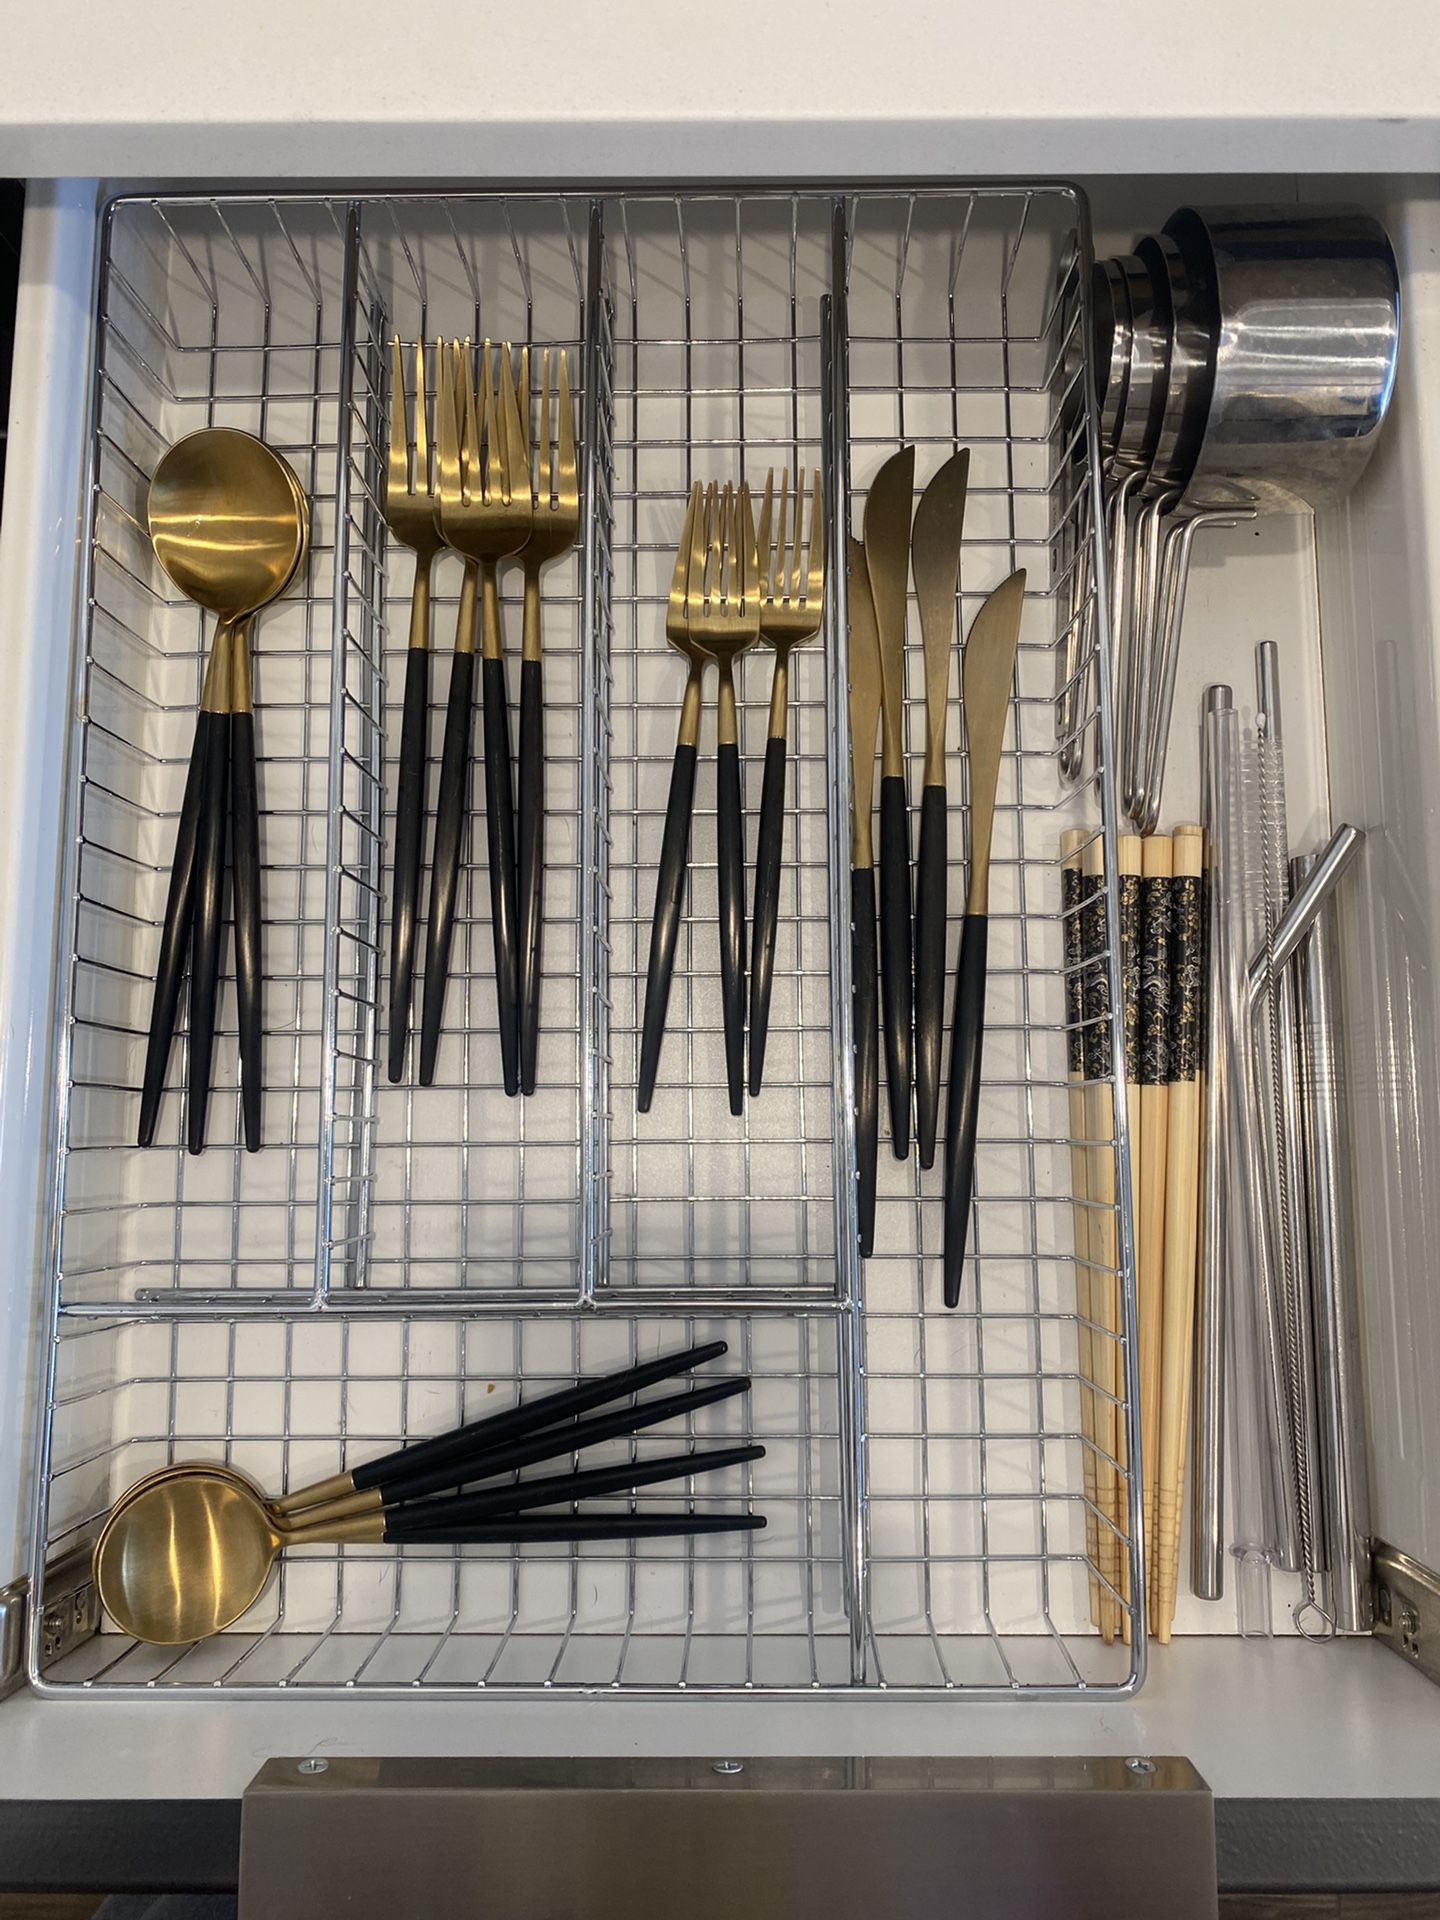 utensils, chopsticks, straws, measuring cups